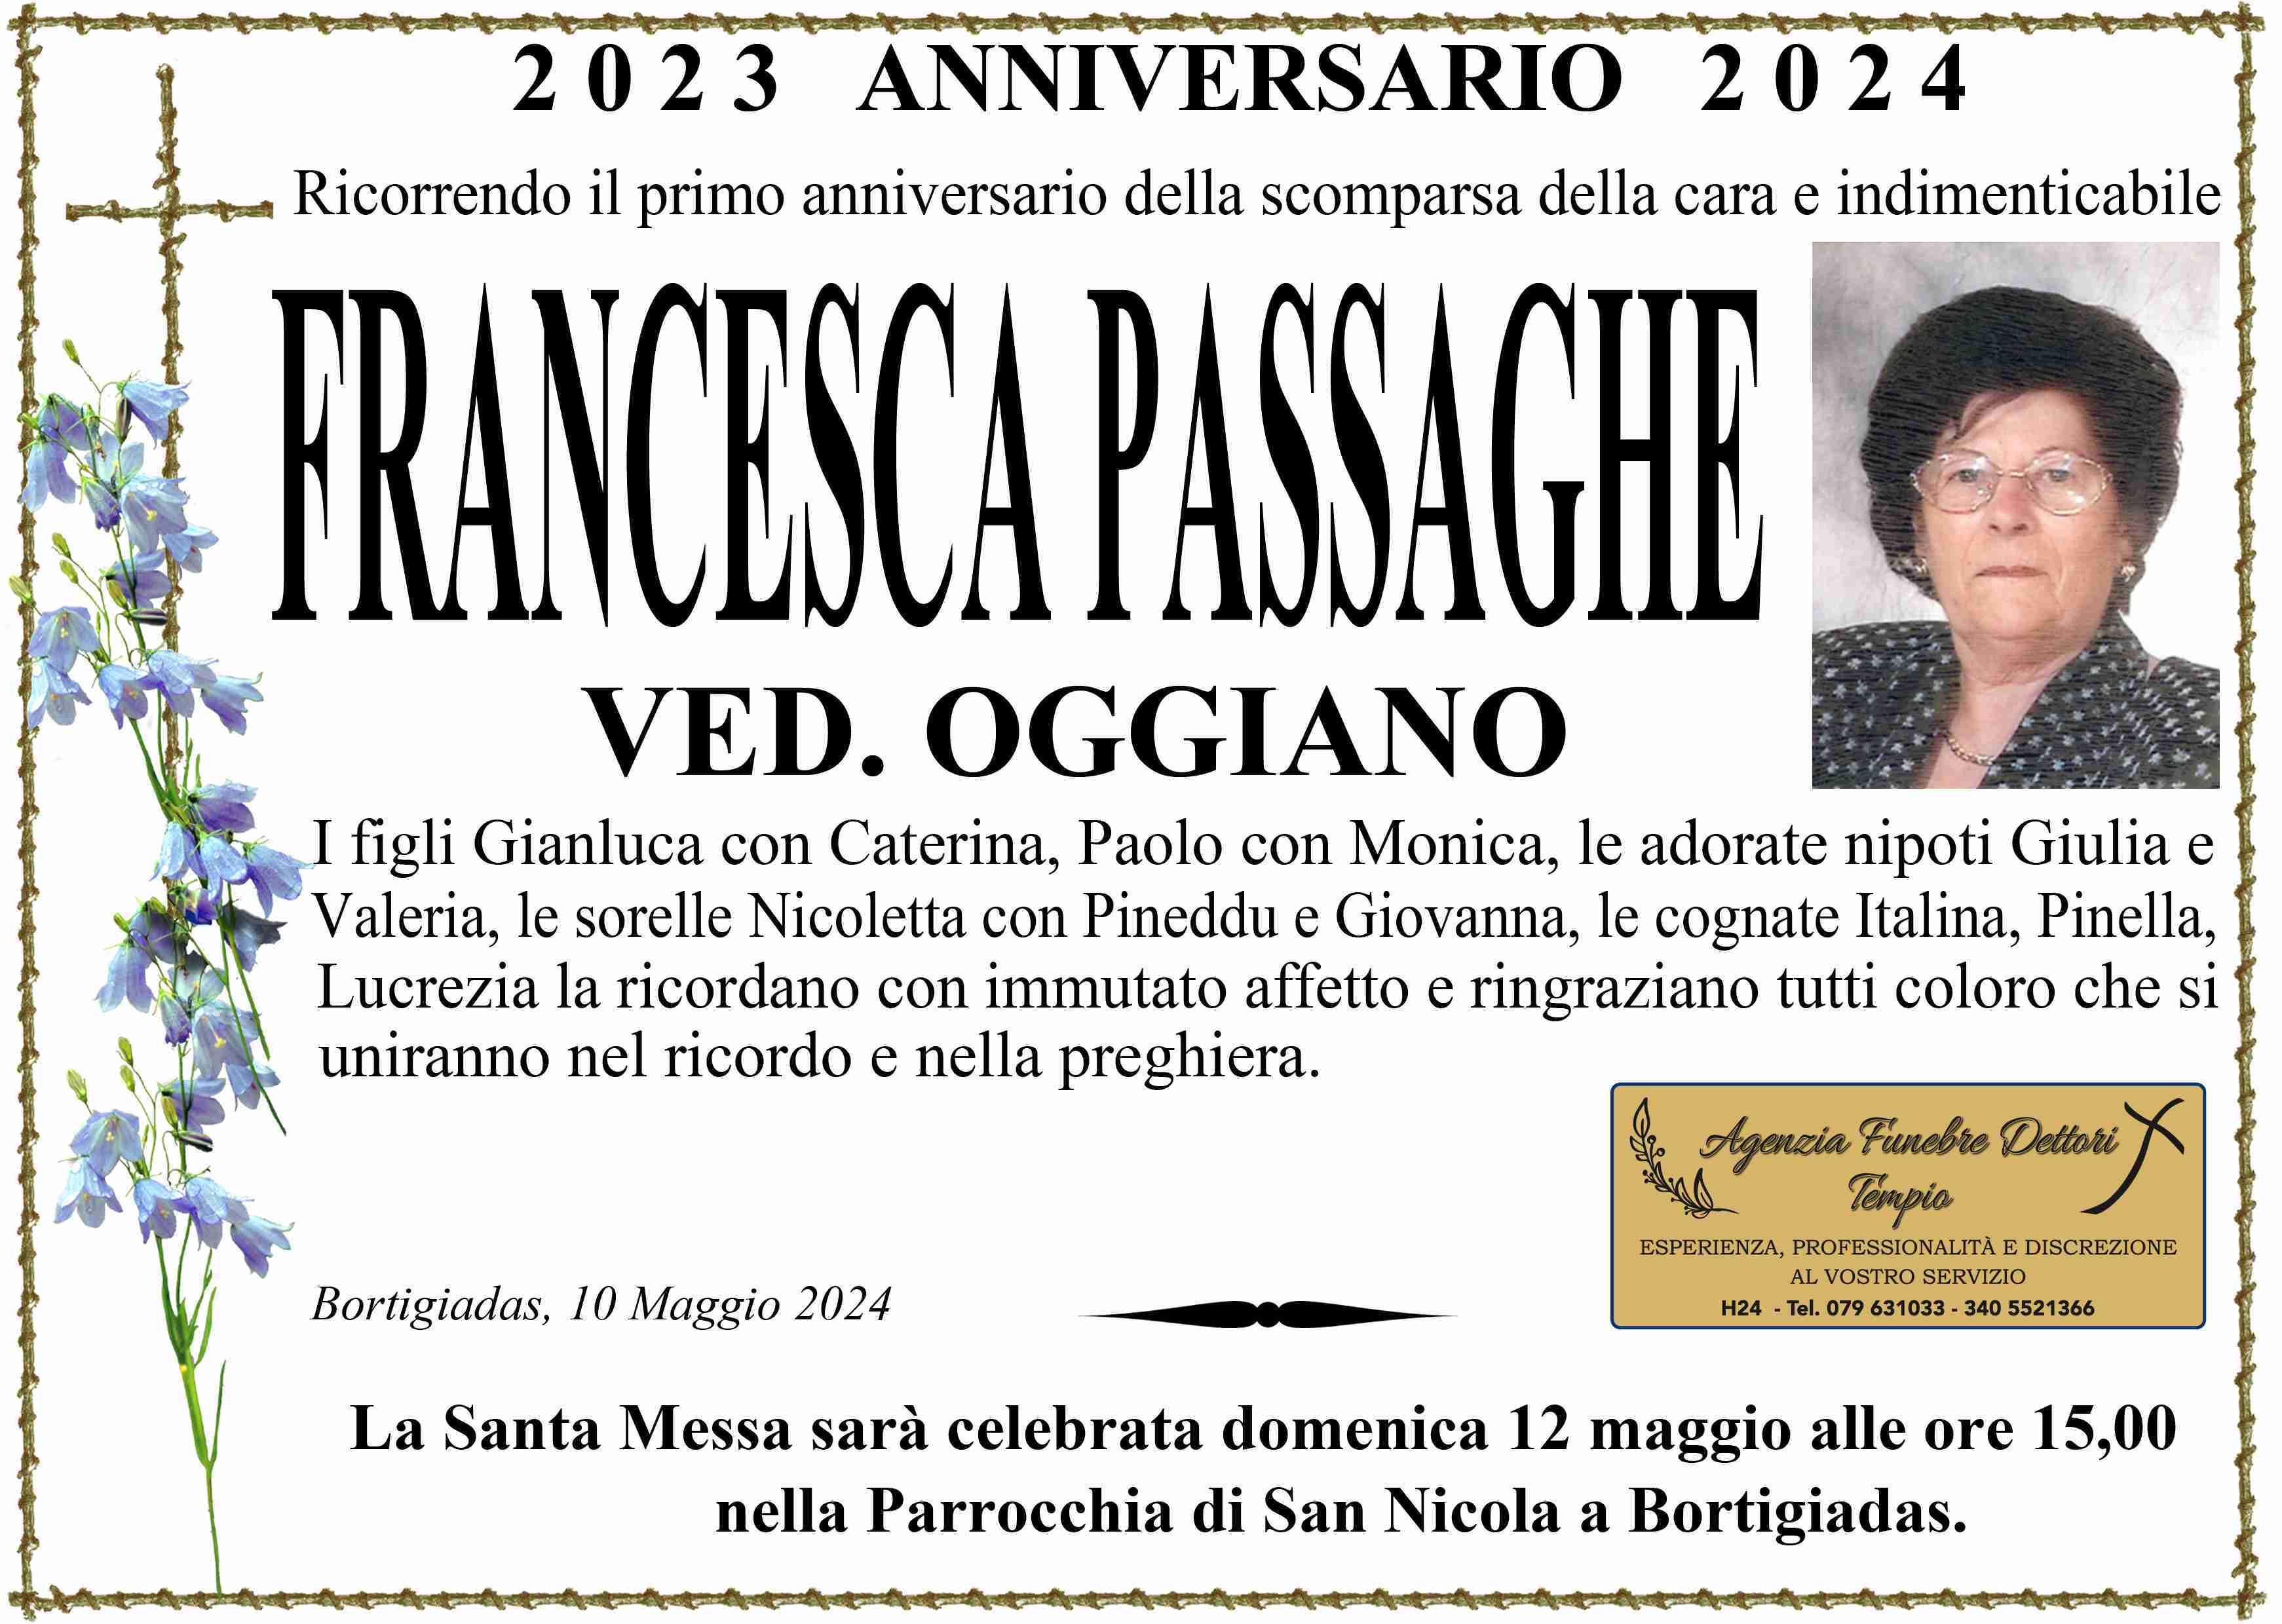 Francesca Passaghe